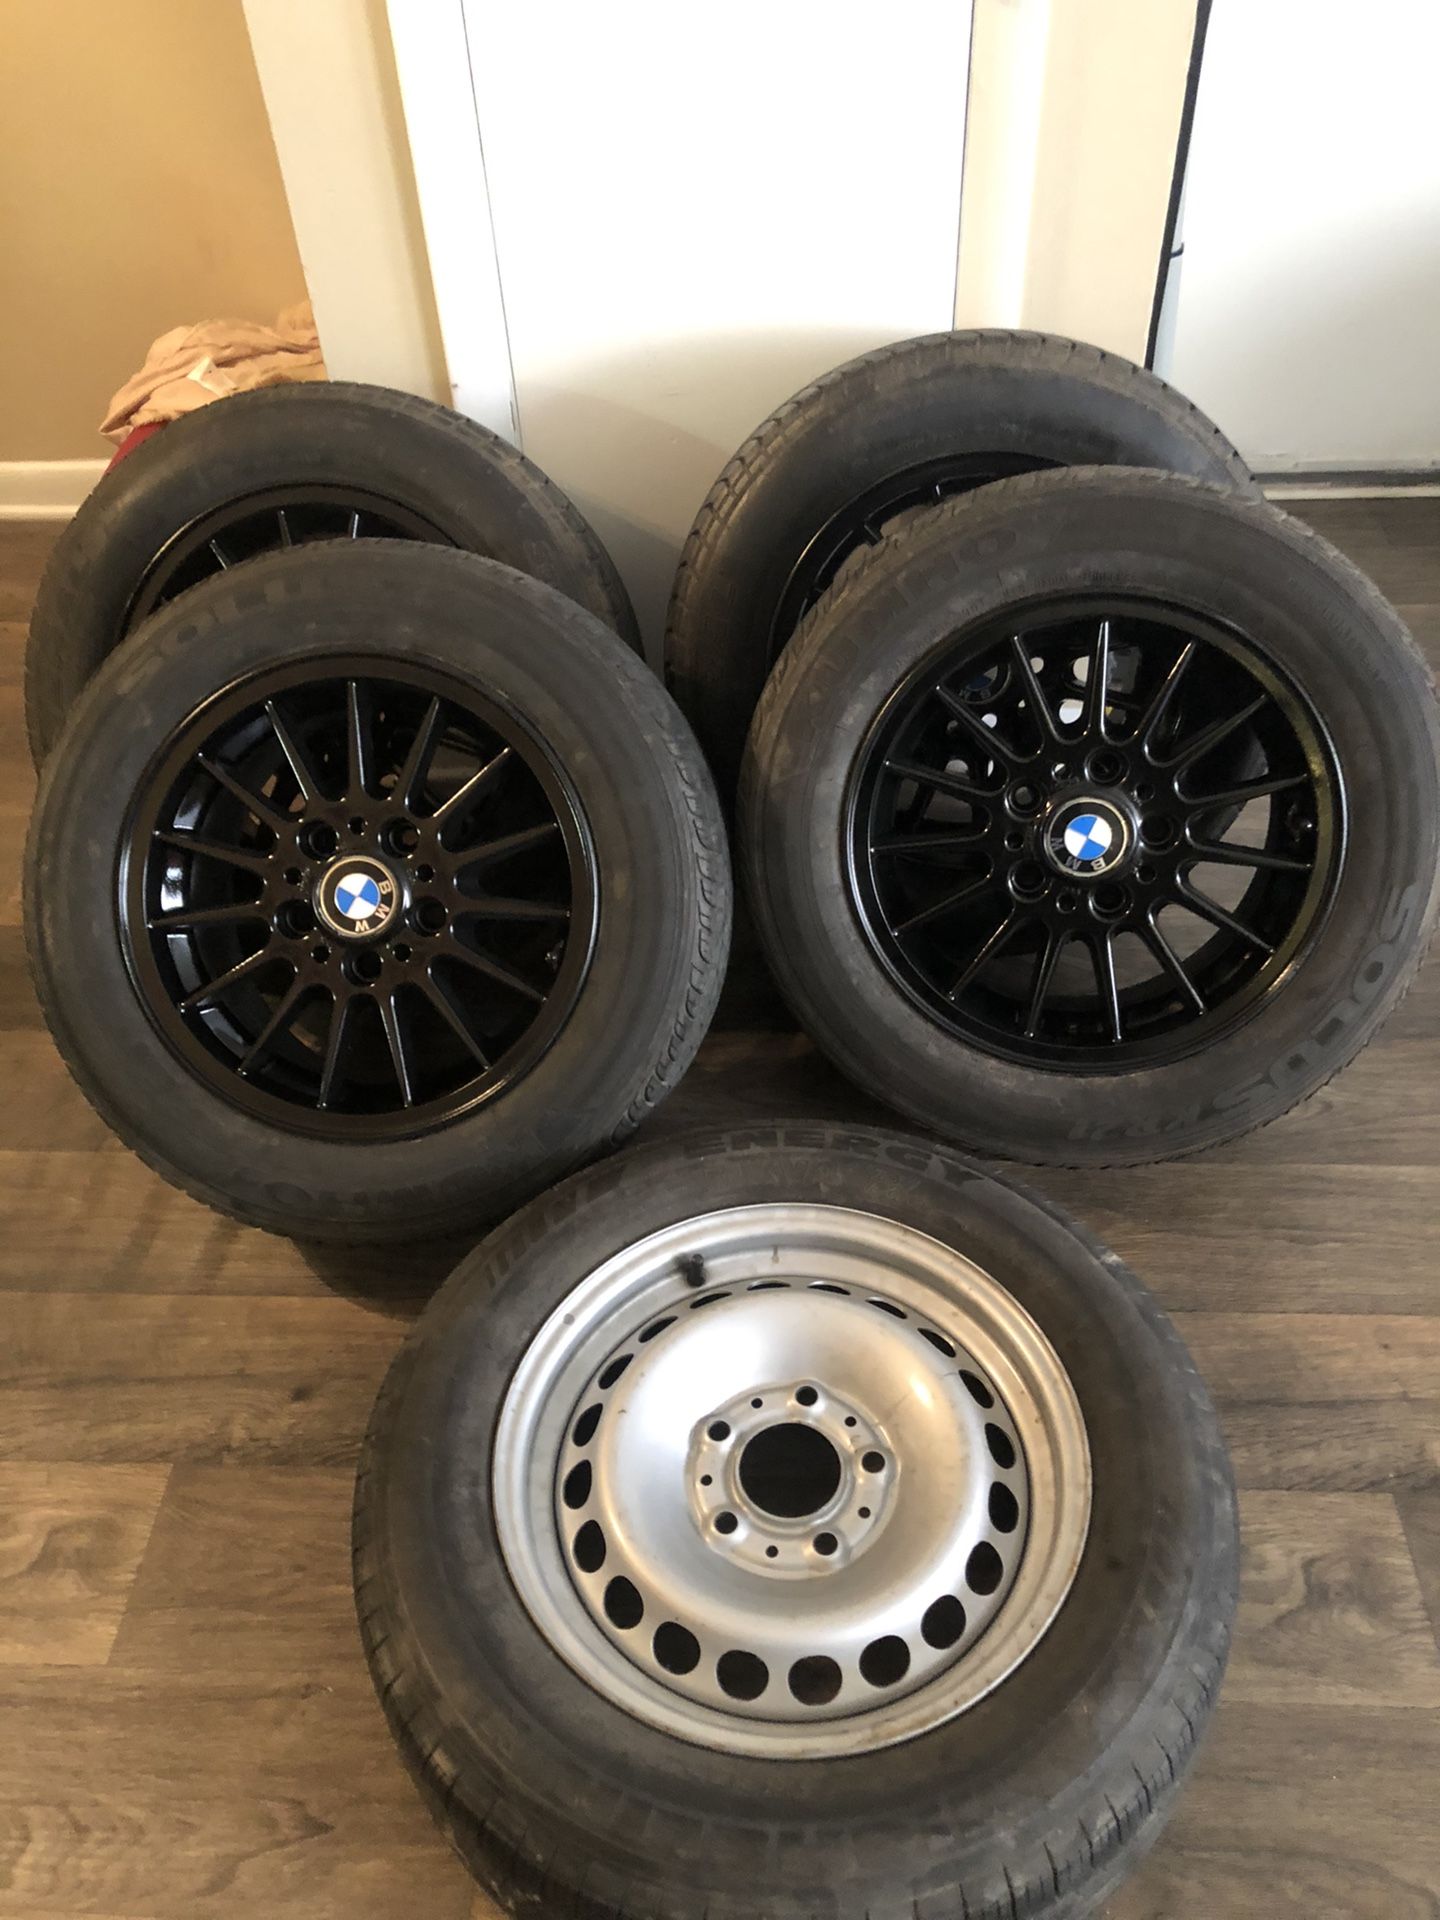 BMW 3 series tire and rim set